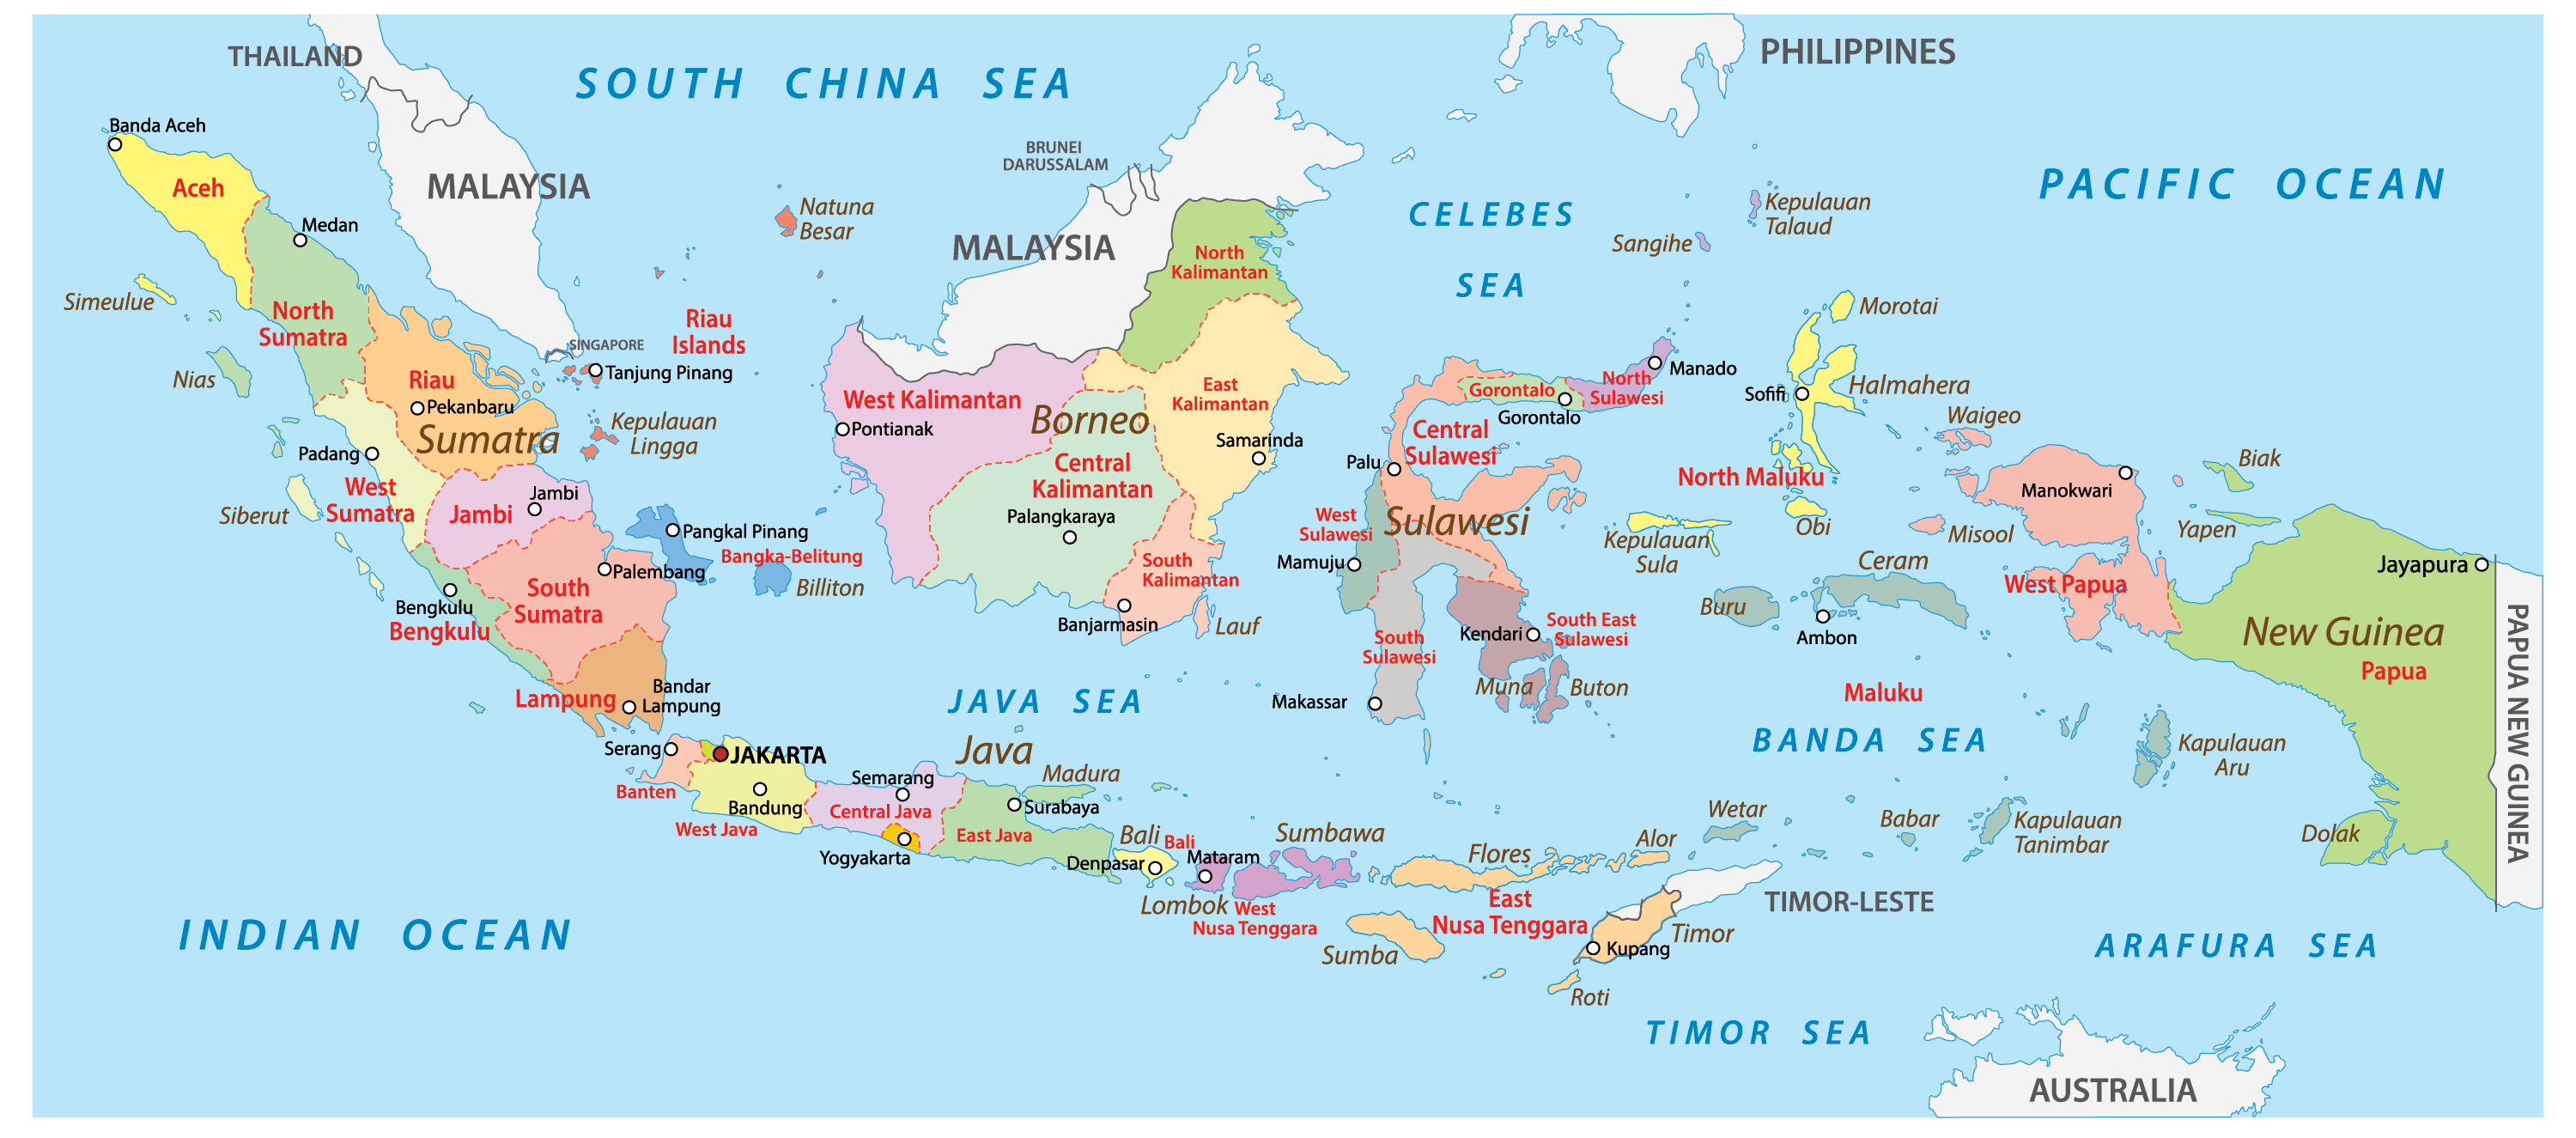 Jakarta Indonesia Map